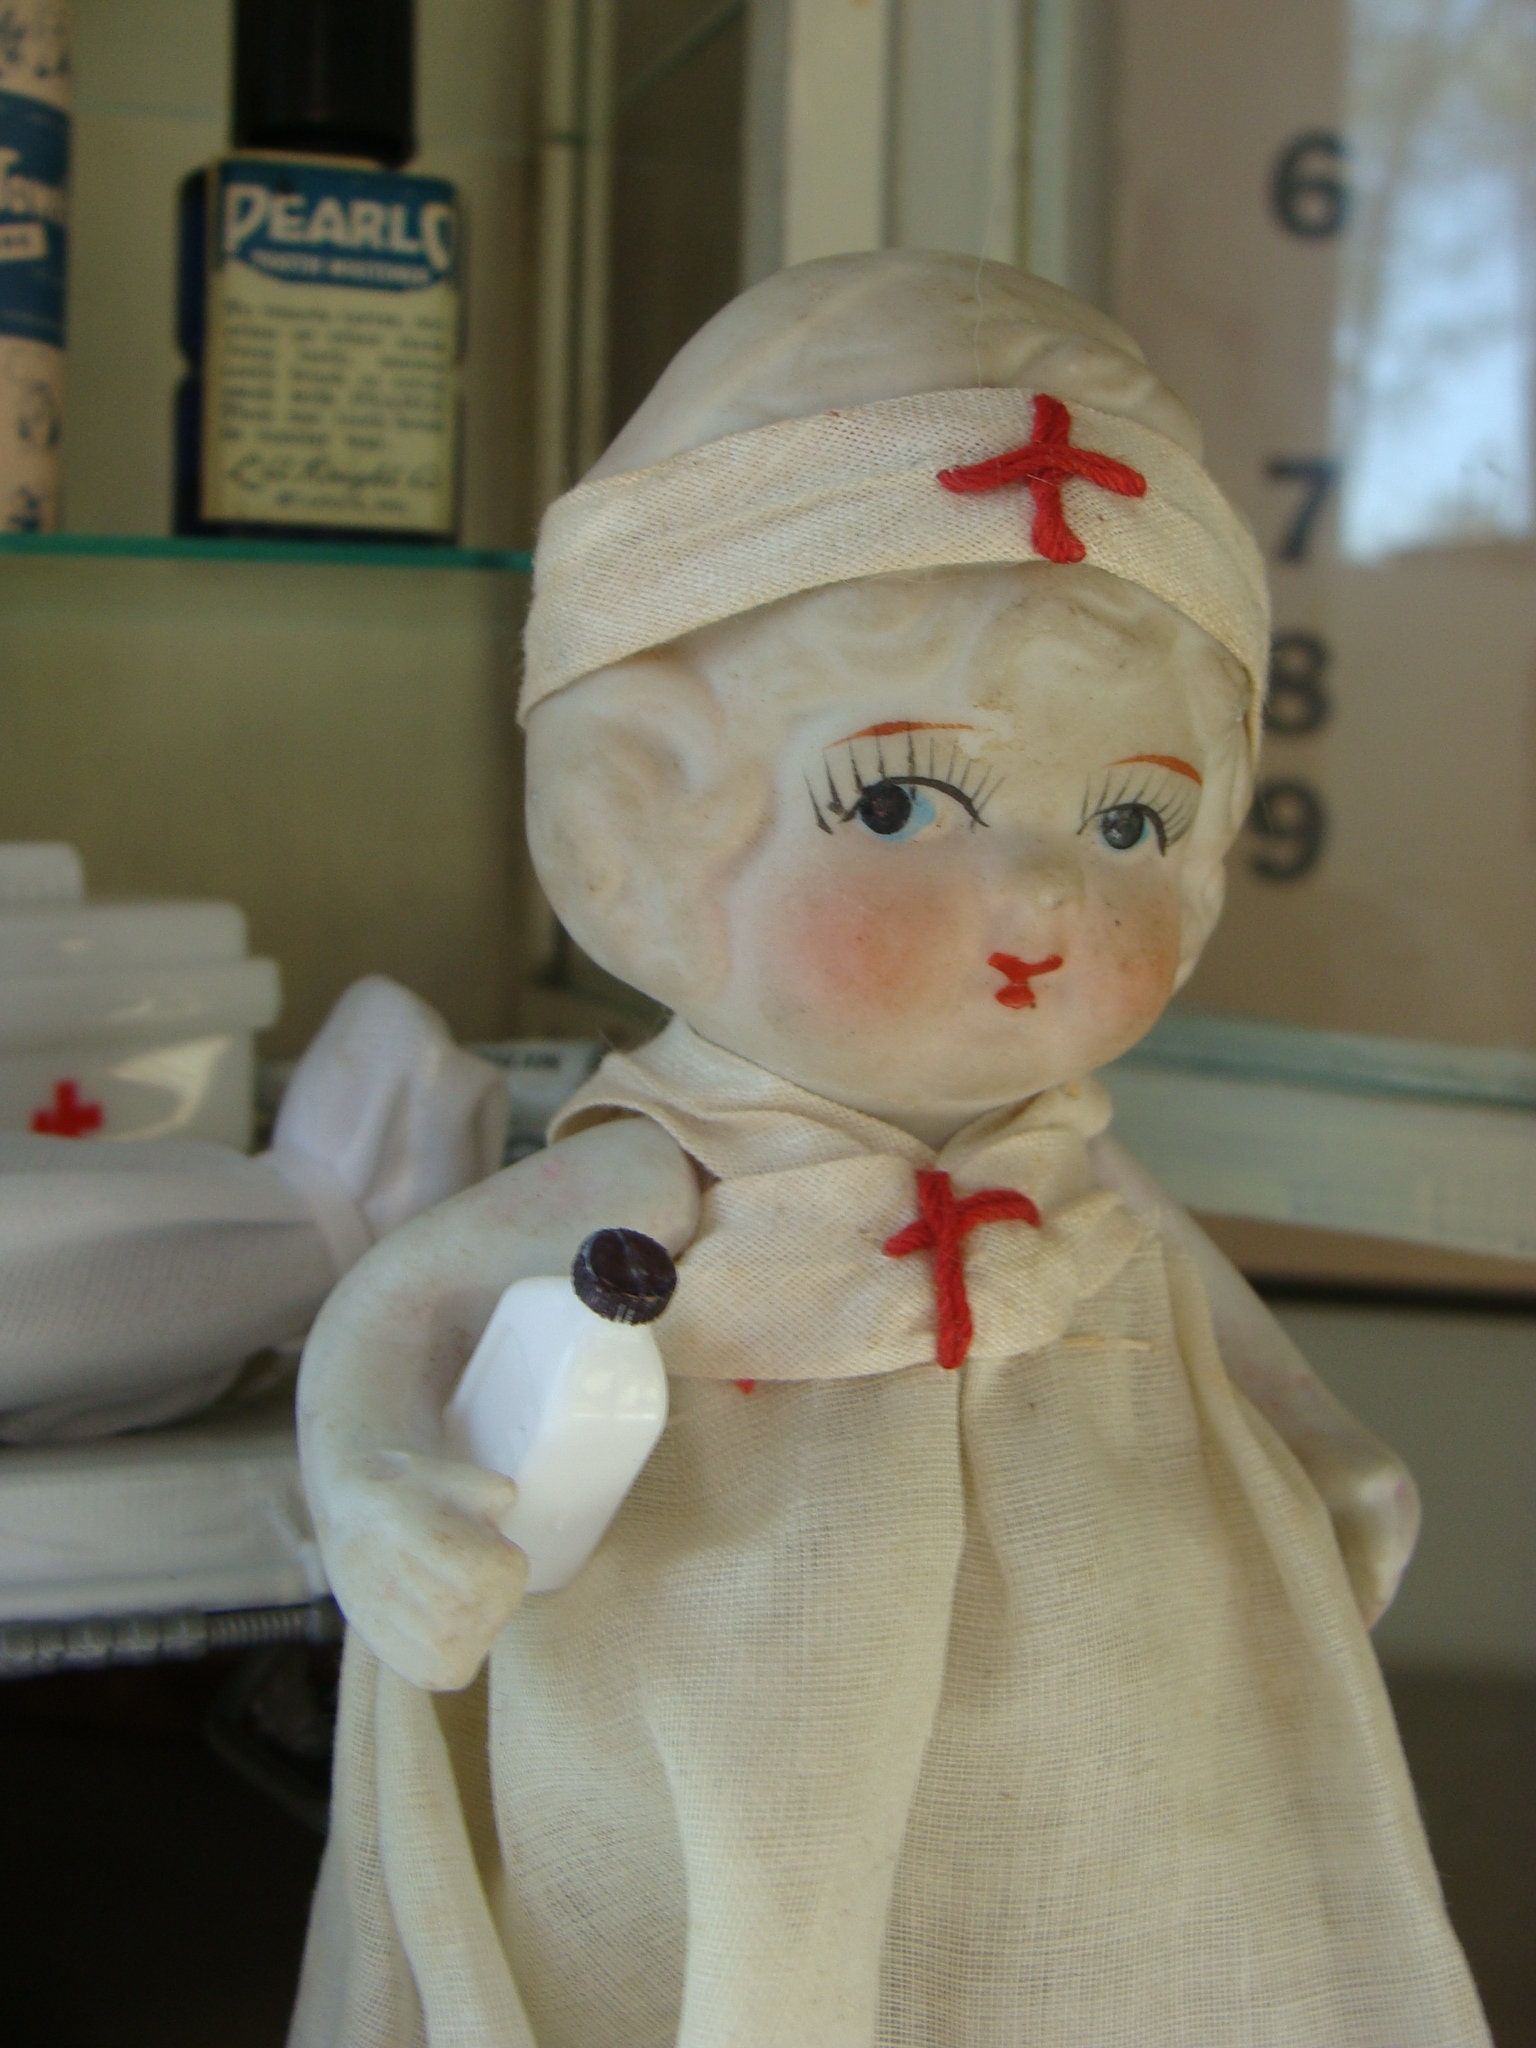 Vintage Wooden dolls, Poland, jointed, 7” tall, Nurse